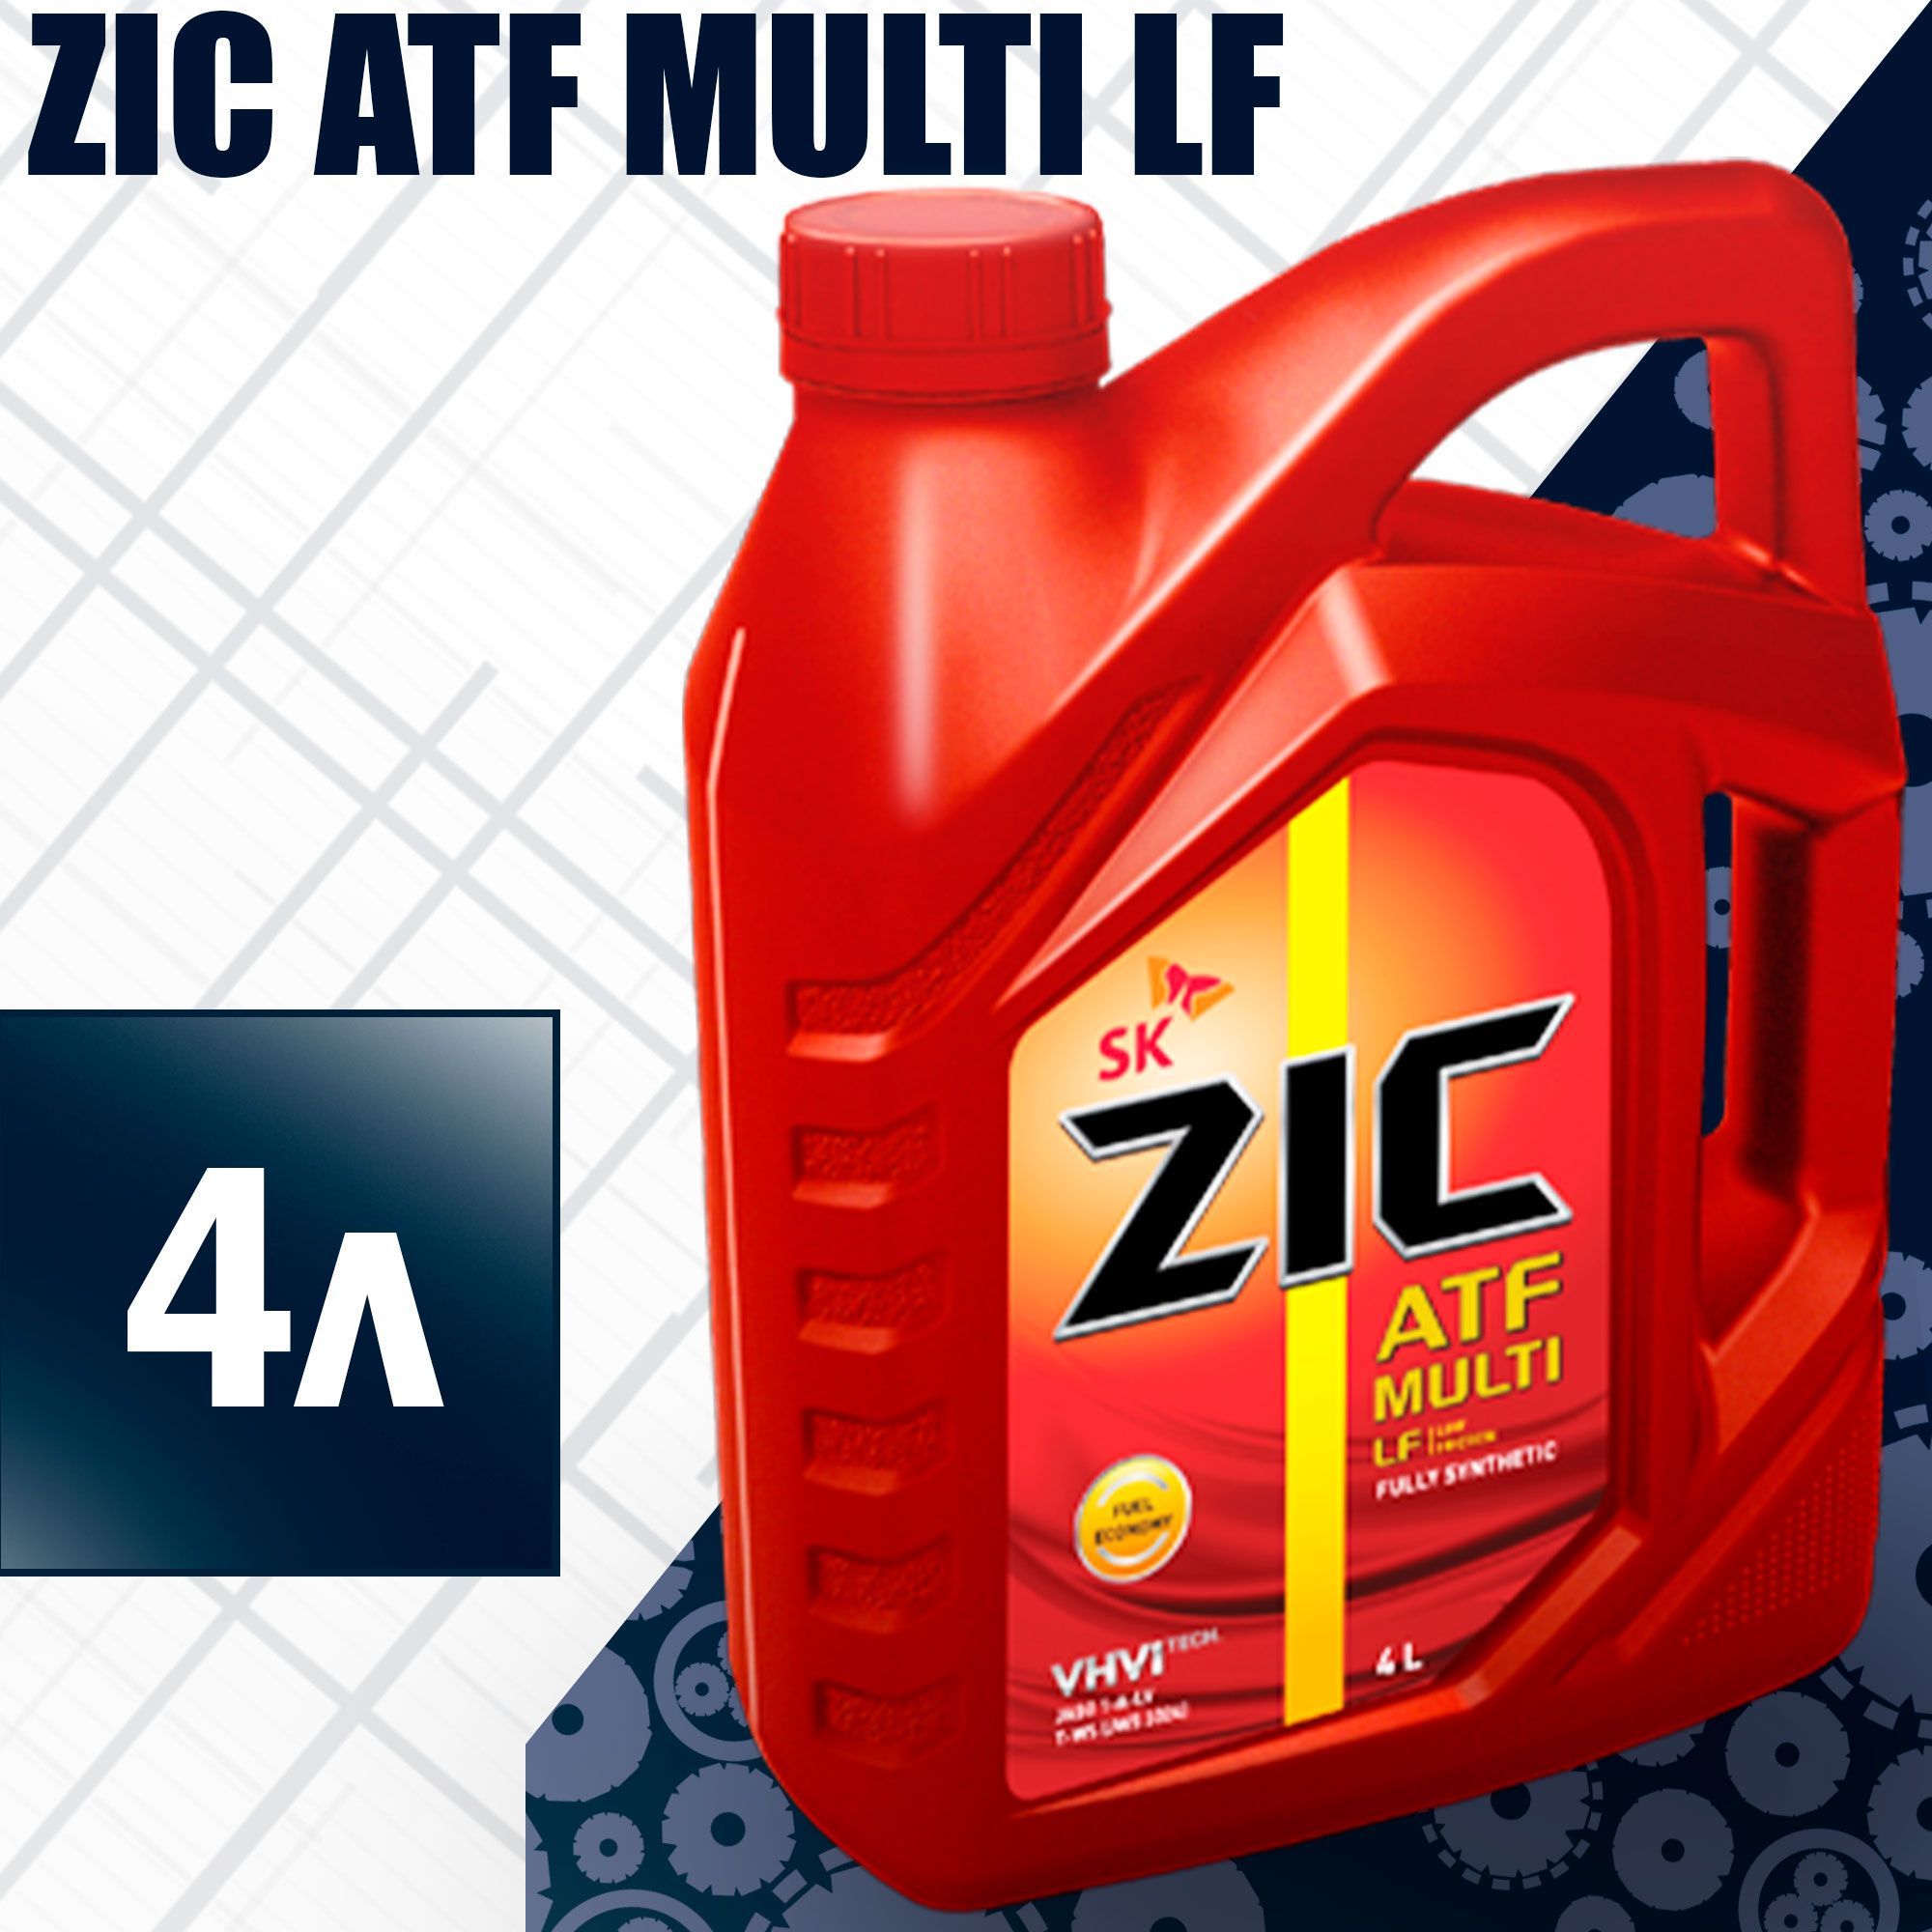 Zic atf multi купить. ZIC ATF Multi LF. ZIC ATF Multi LF xc90. ZIC ATF Multi Мазда 3. ZIC 162665.